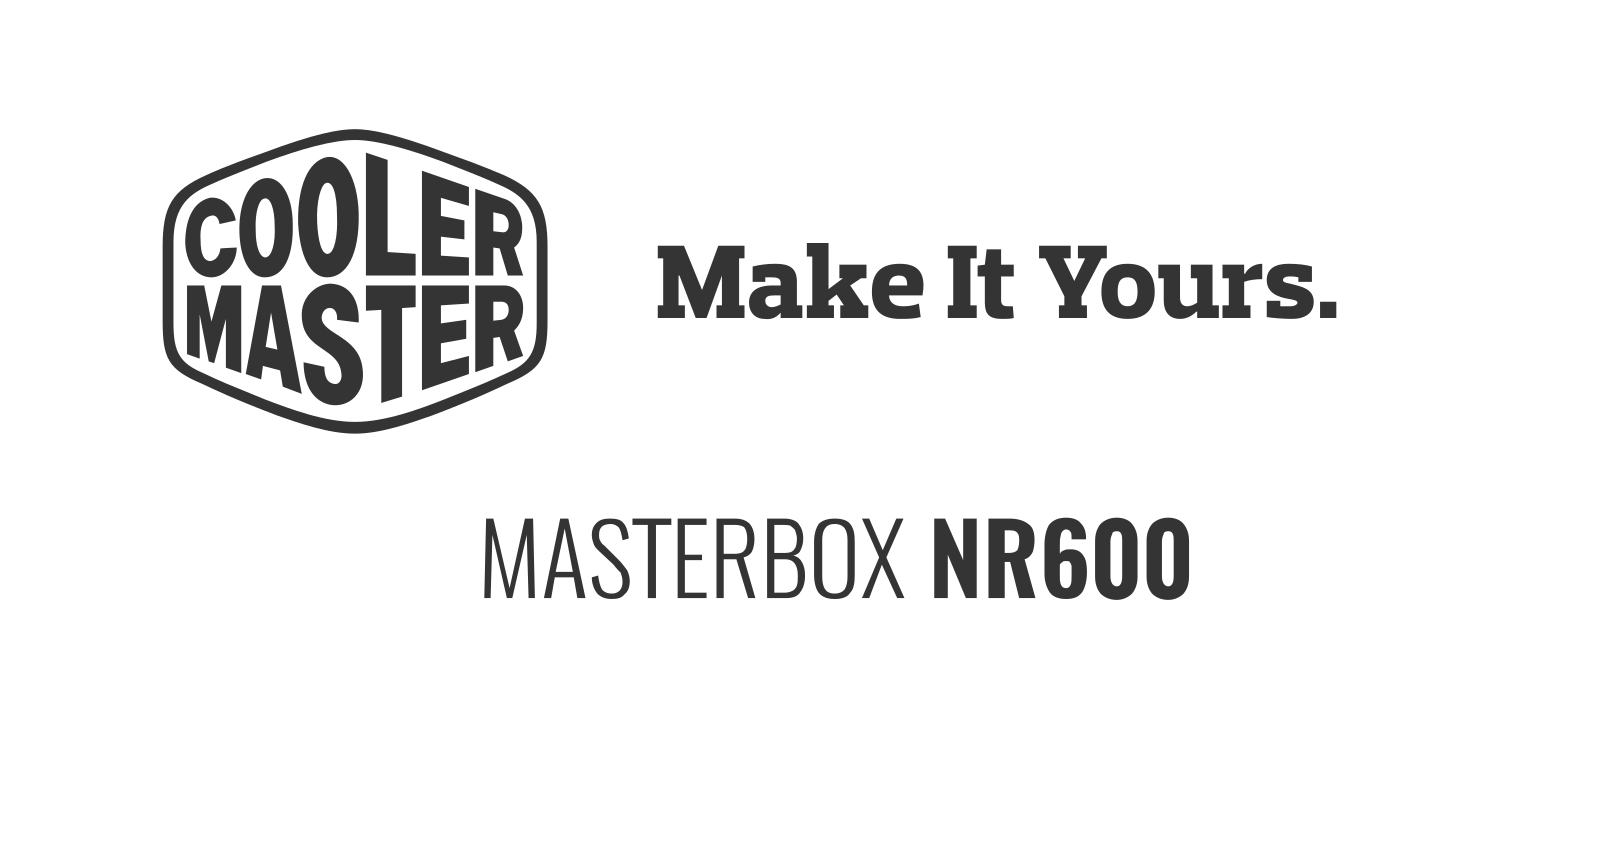 Cooler master NR600 User Manual